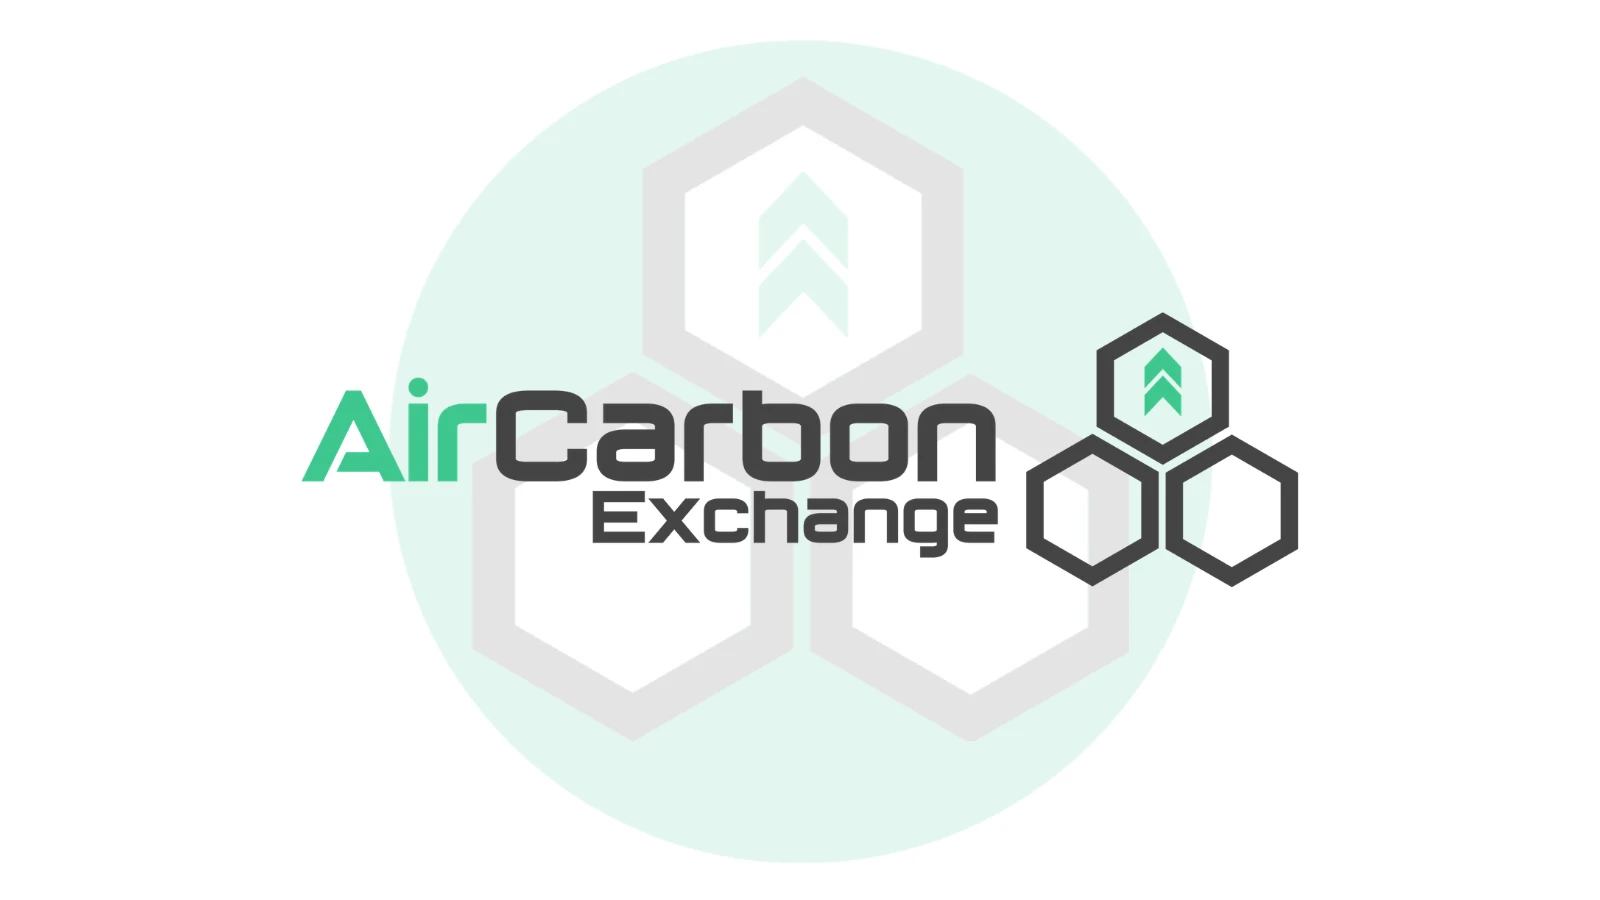 AirCarbon Exchange 於 2019 年在新加坡成立，當時是專為航空公司所設立的碳信用數位交易平台，而現今已經是碳交易平台的前三名。